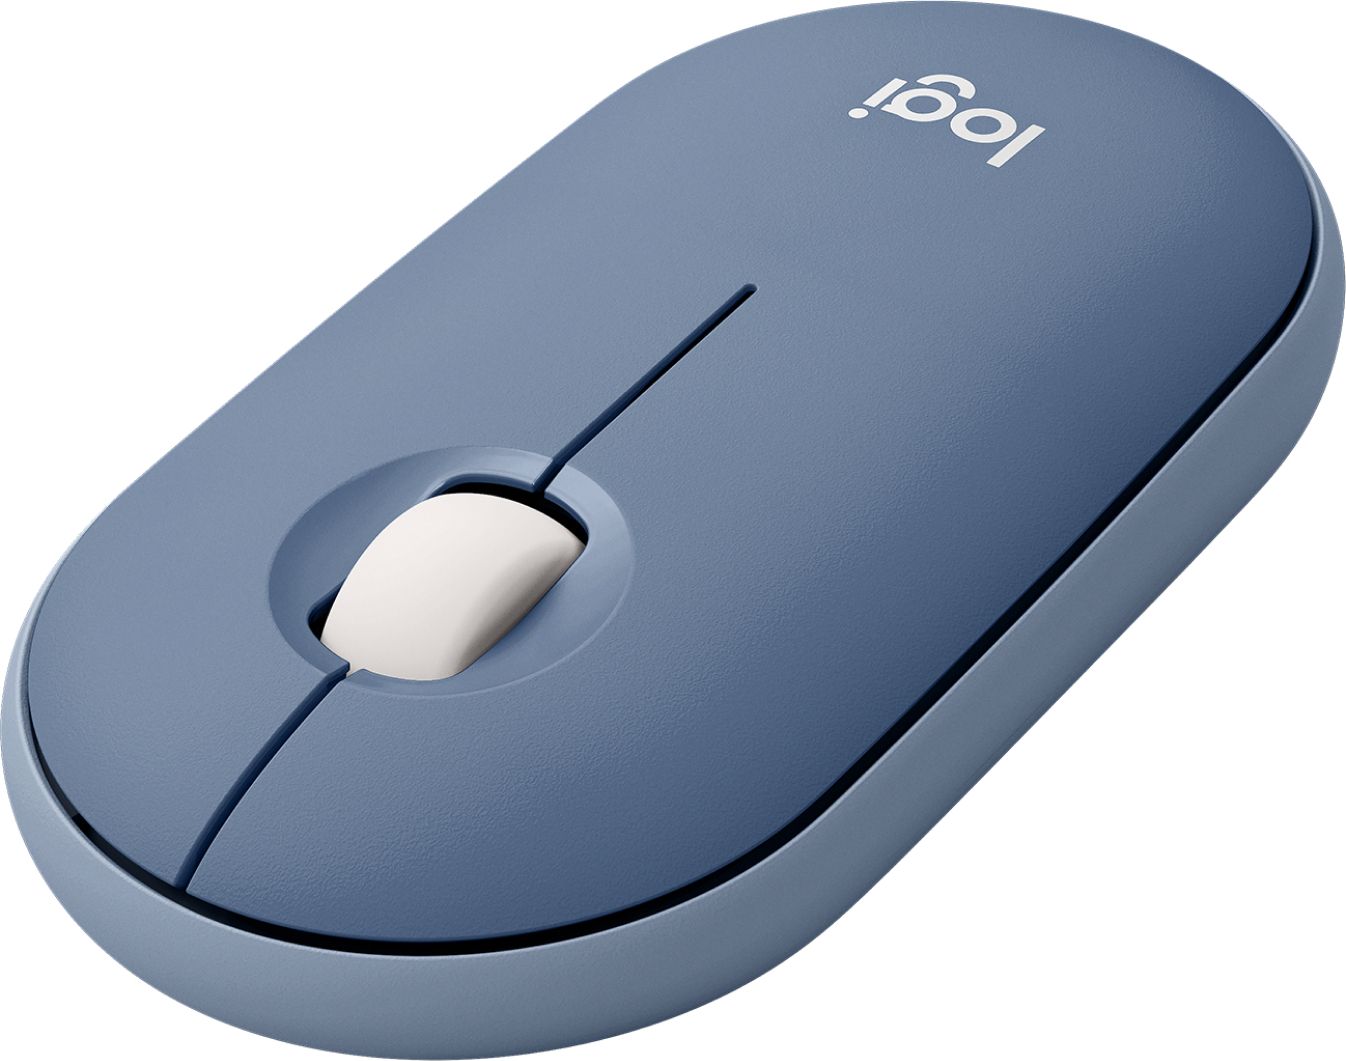 LOGITECH Pebble M350 Wireless Mouse - BLUEBERRY